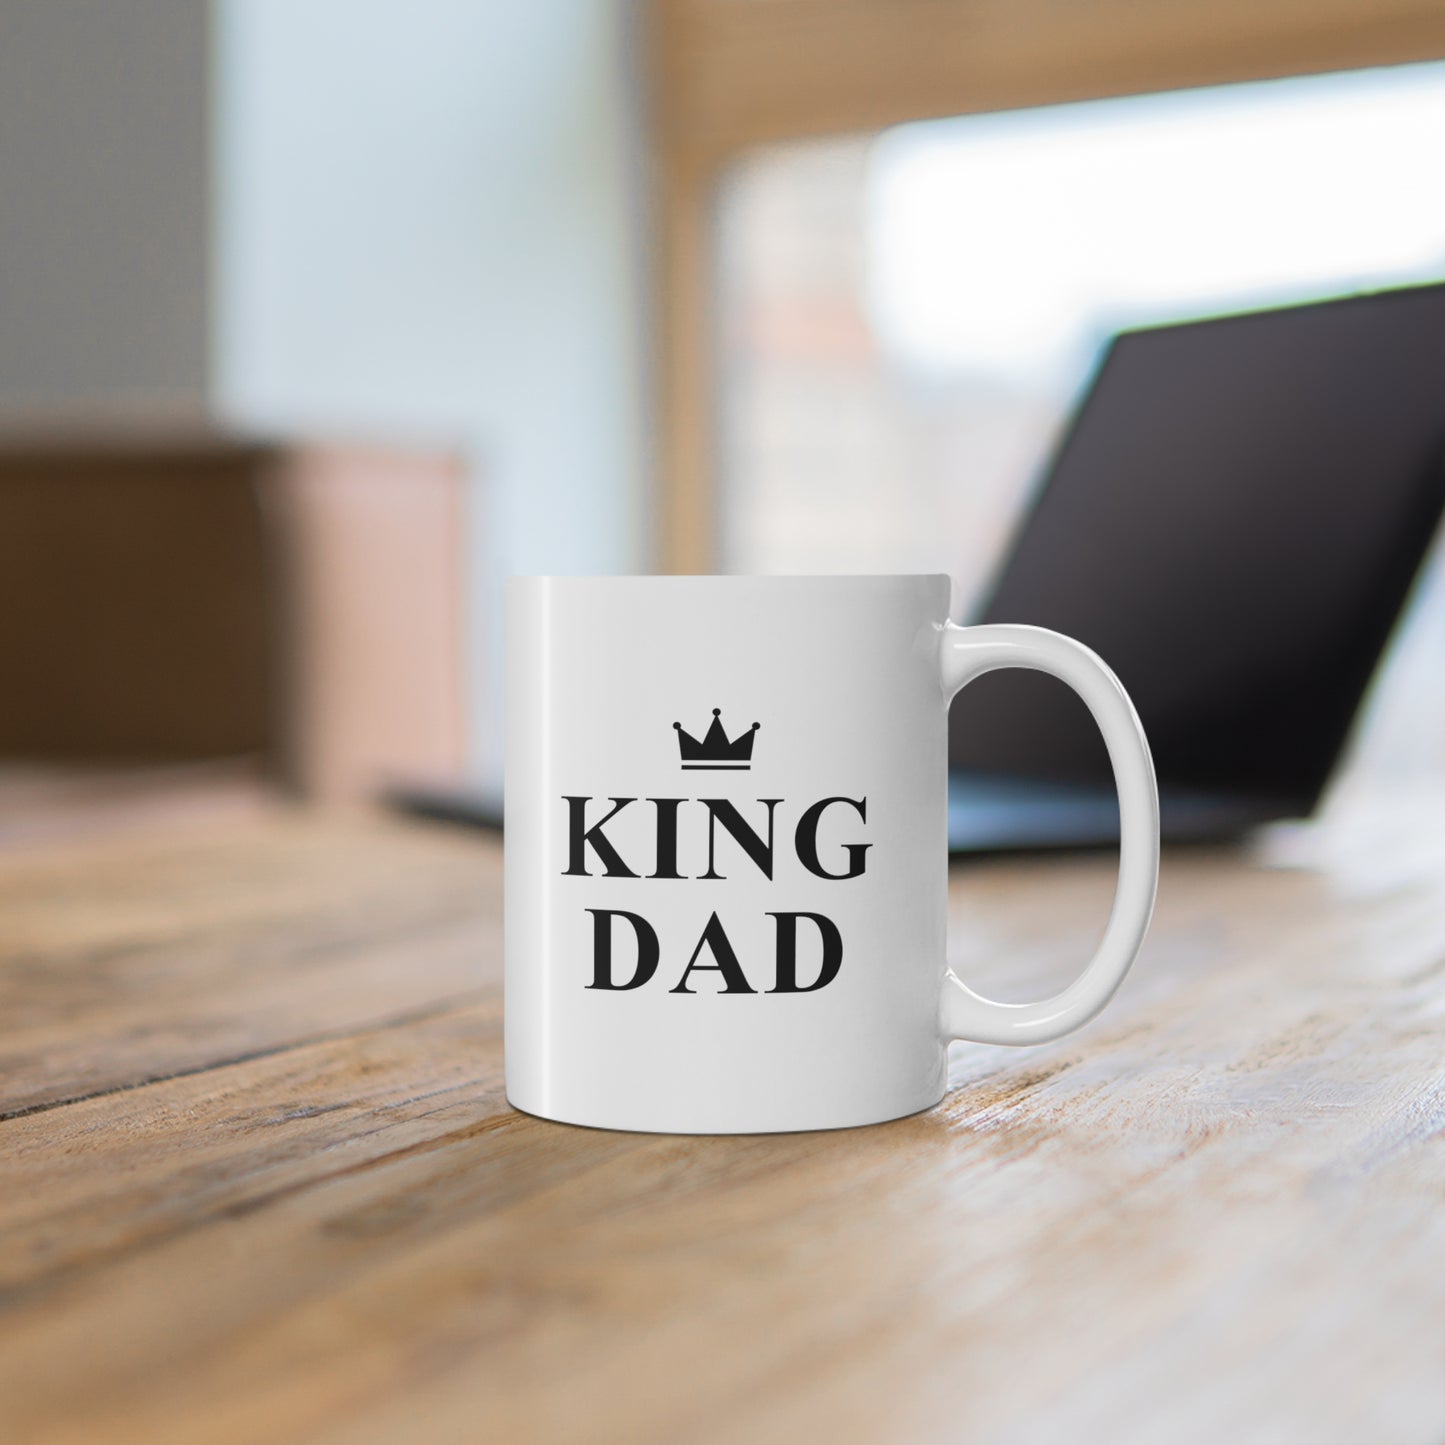 11oz ceramic mug with quote King Dad